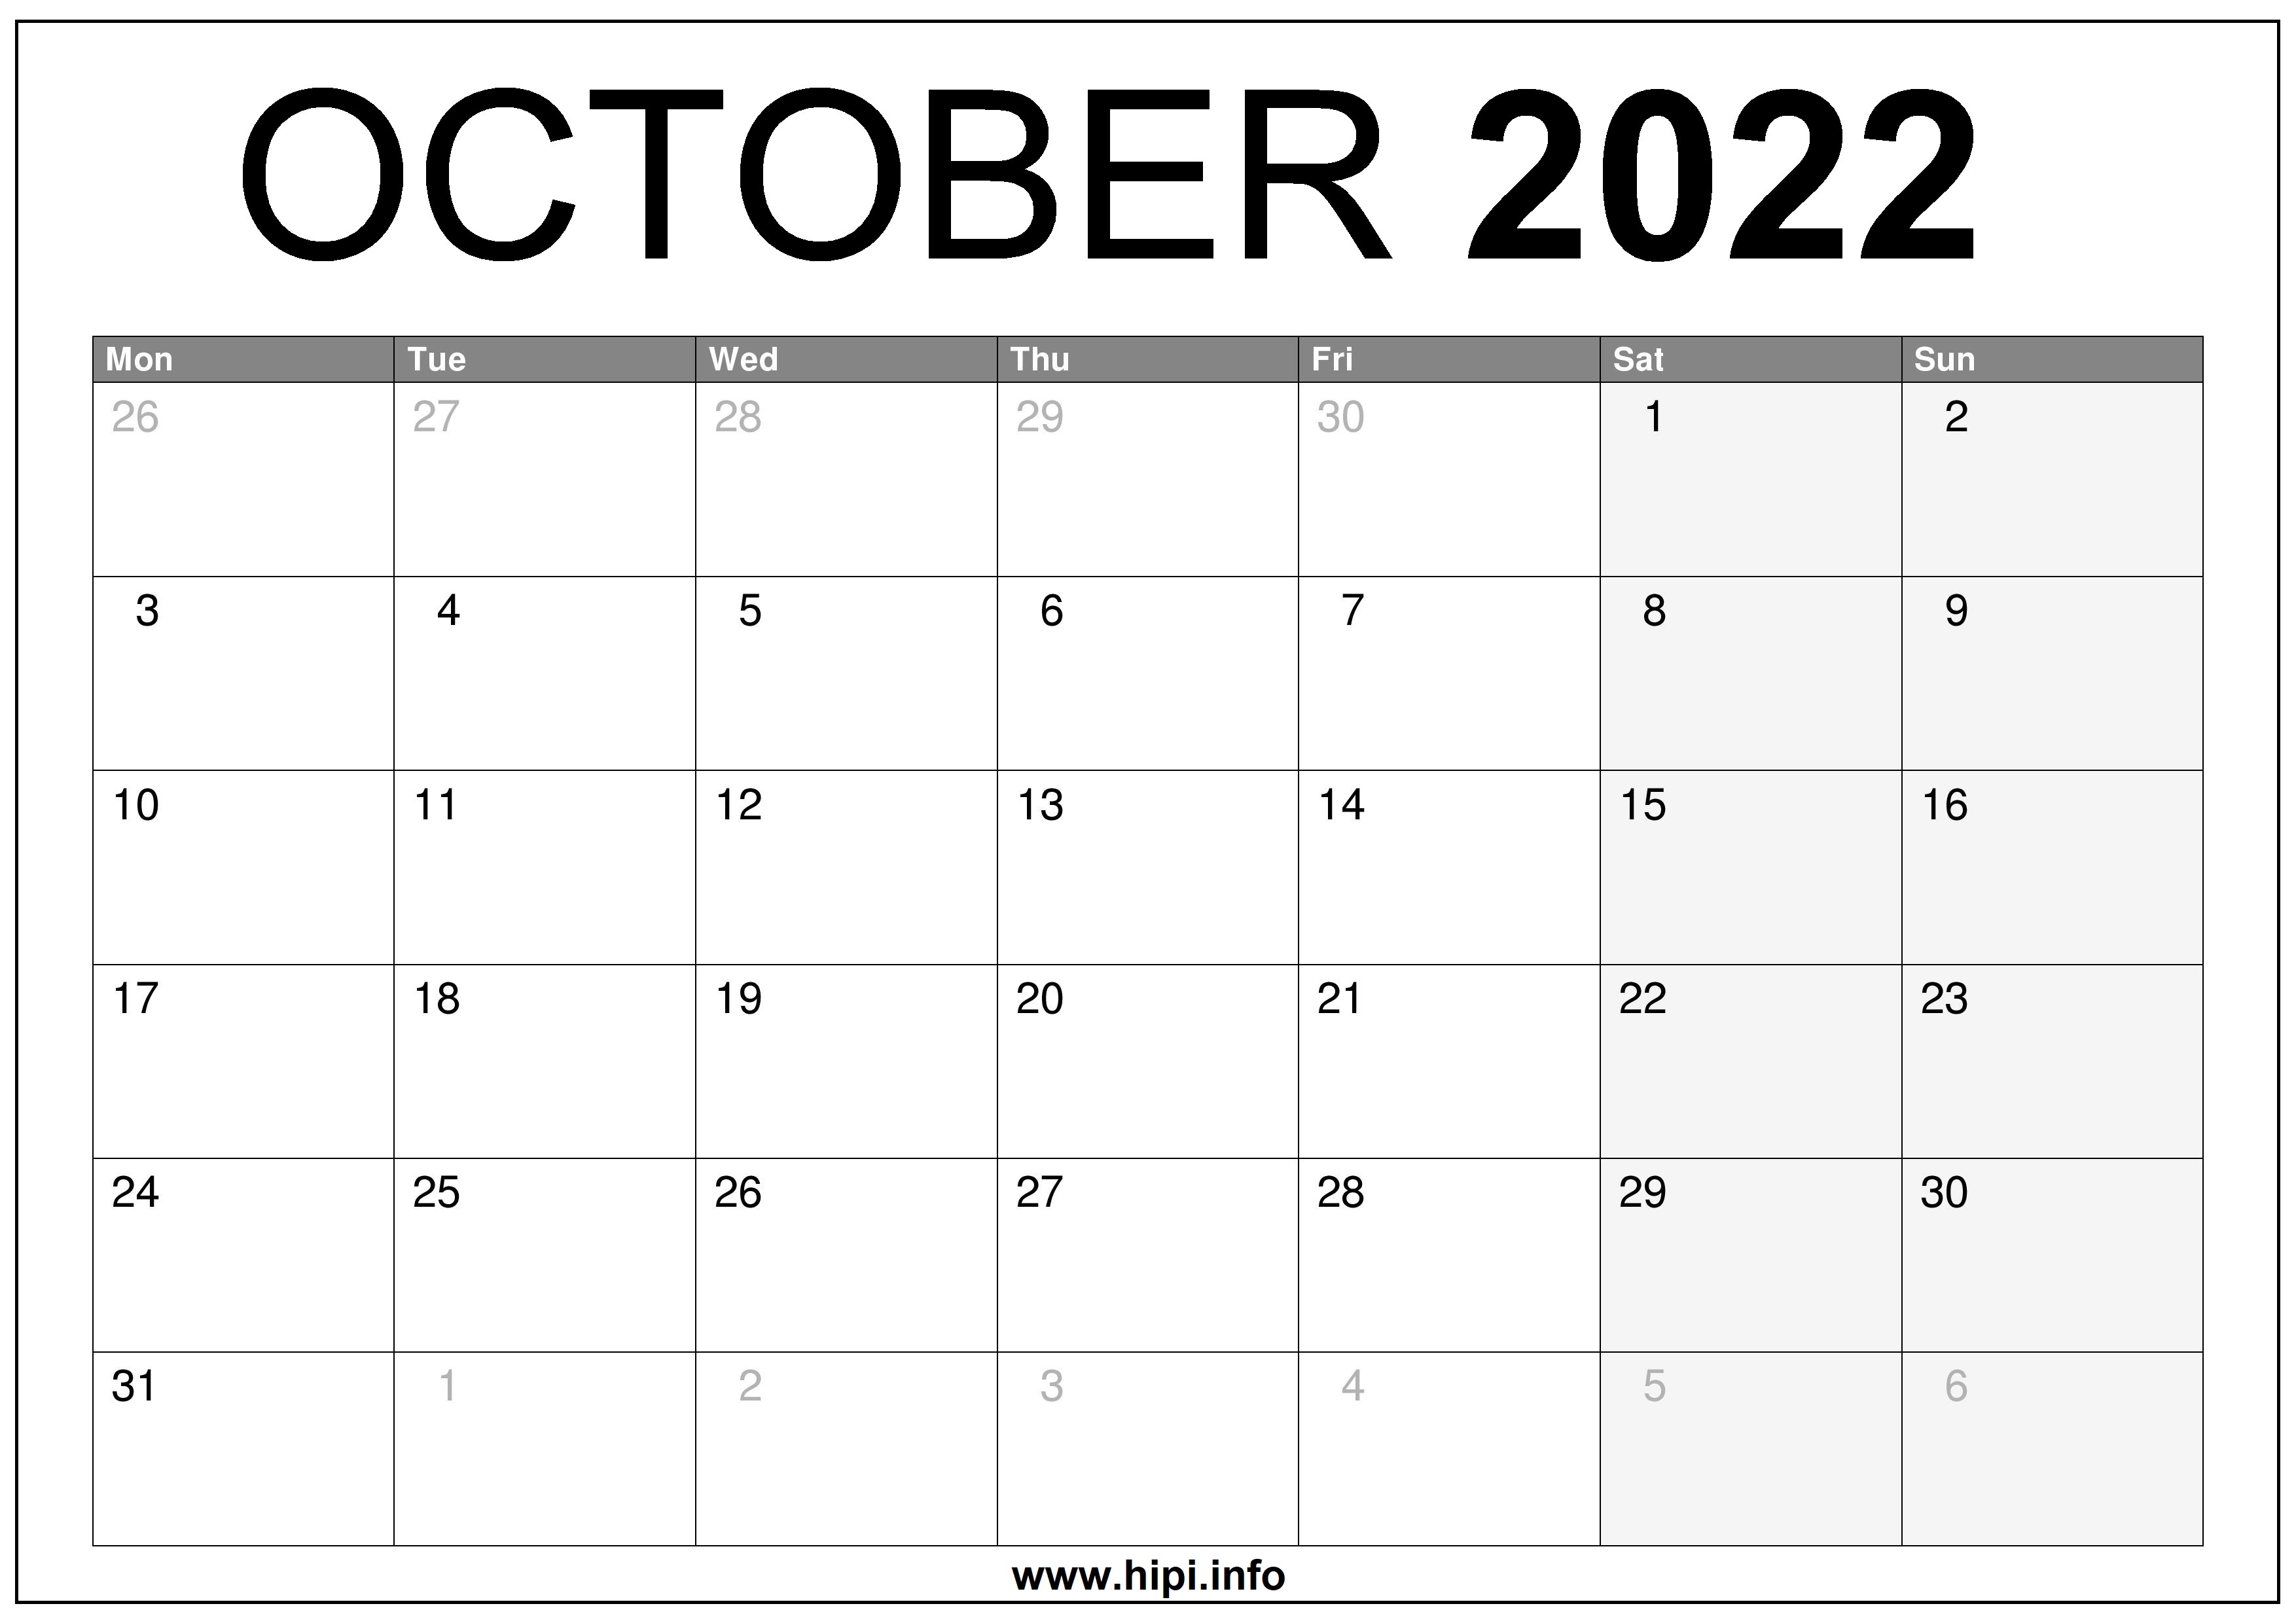 October Calendar Printable 2022 October 2022 Uk Calendar Printable Free - Hipi.info | Calendars Printable  Free